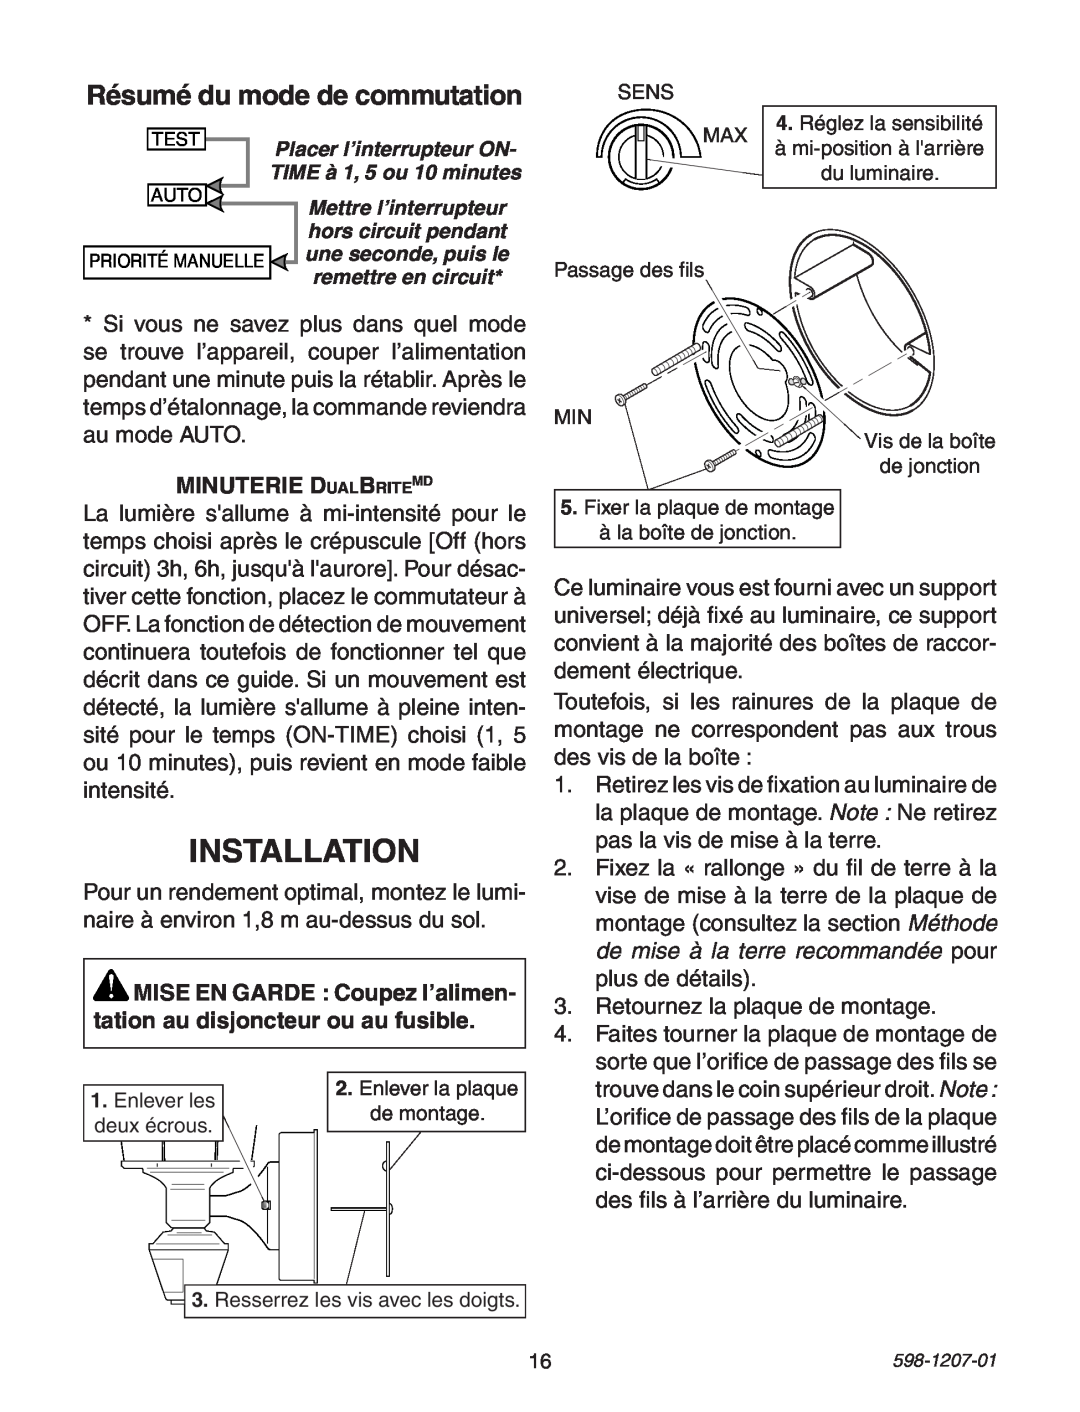 Heath Zenith Motion Sensing Coach Lights manual Résumé du mode de commutation, Minuterie DualBriteMD, Installation 